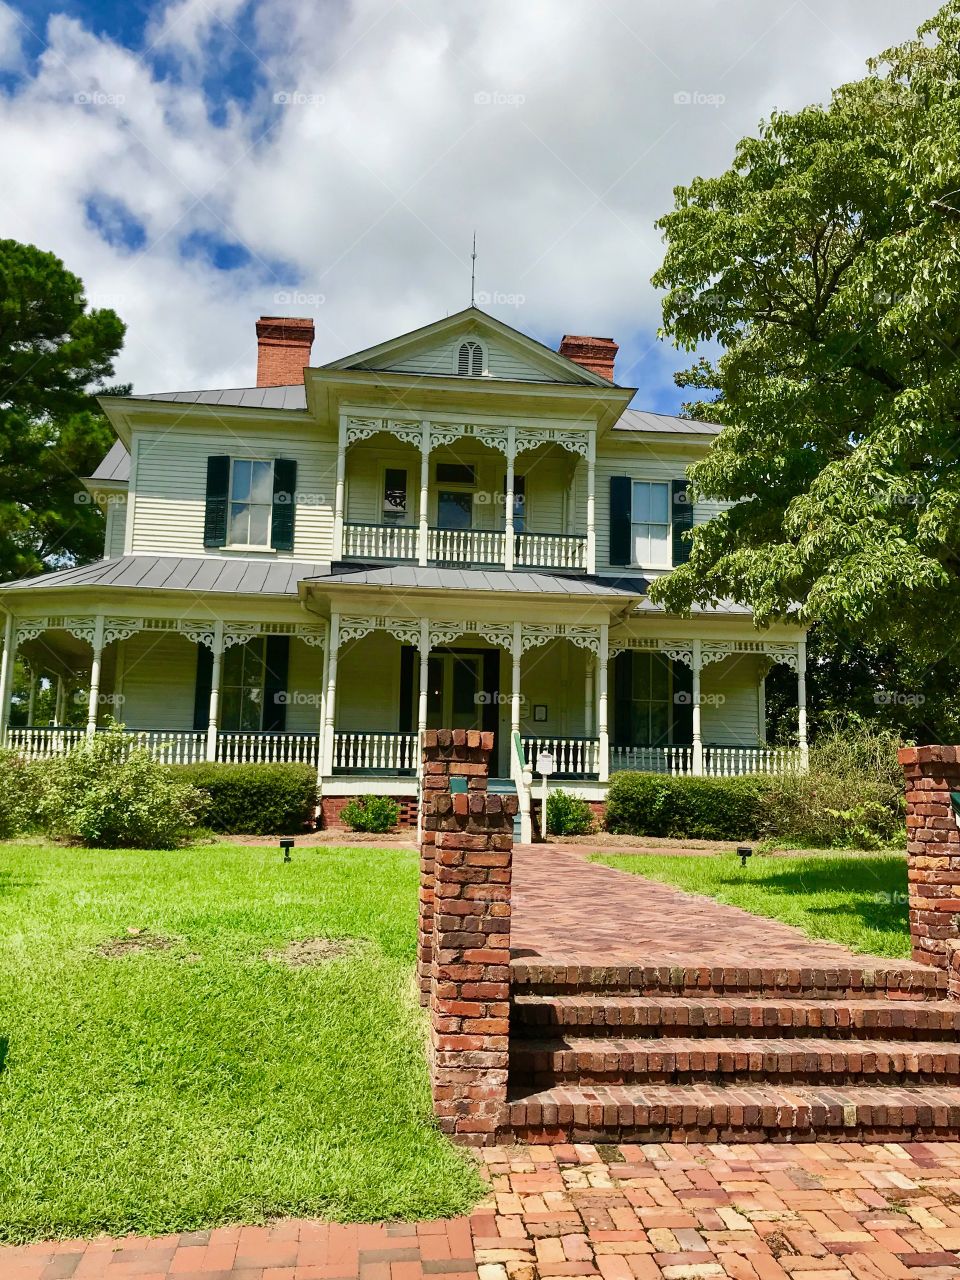 1897 Poe House in Fayetteville, NC